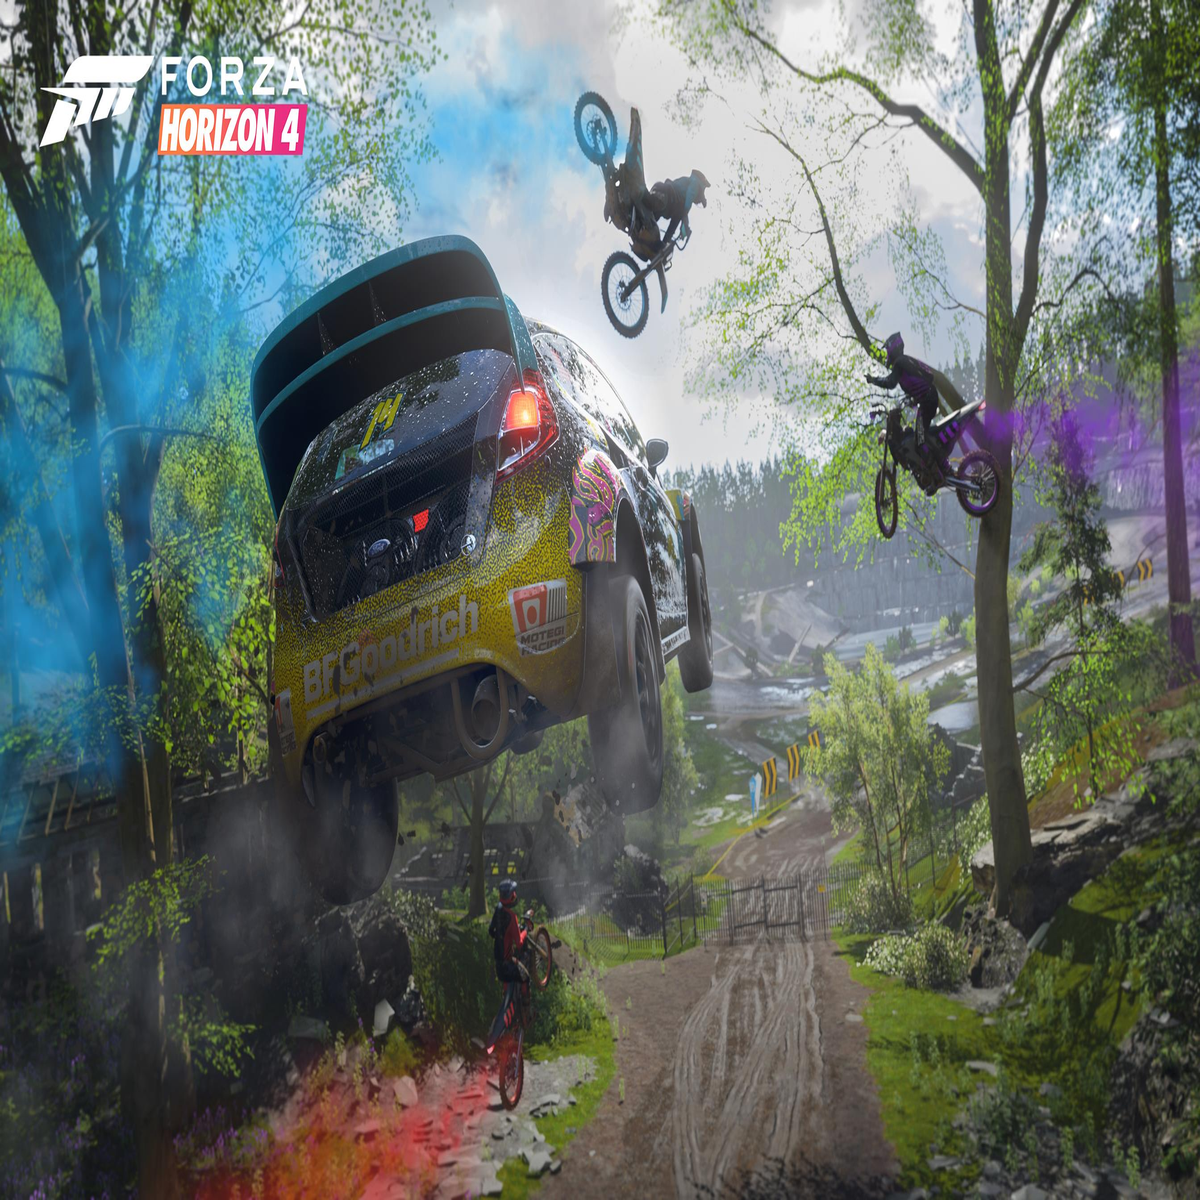 Forza Horizon 4 - Steam Trailer 